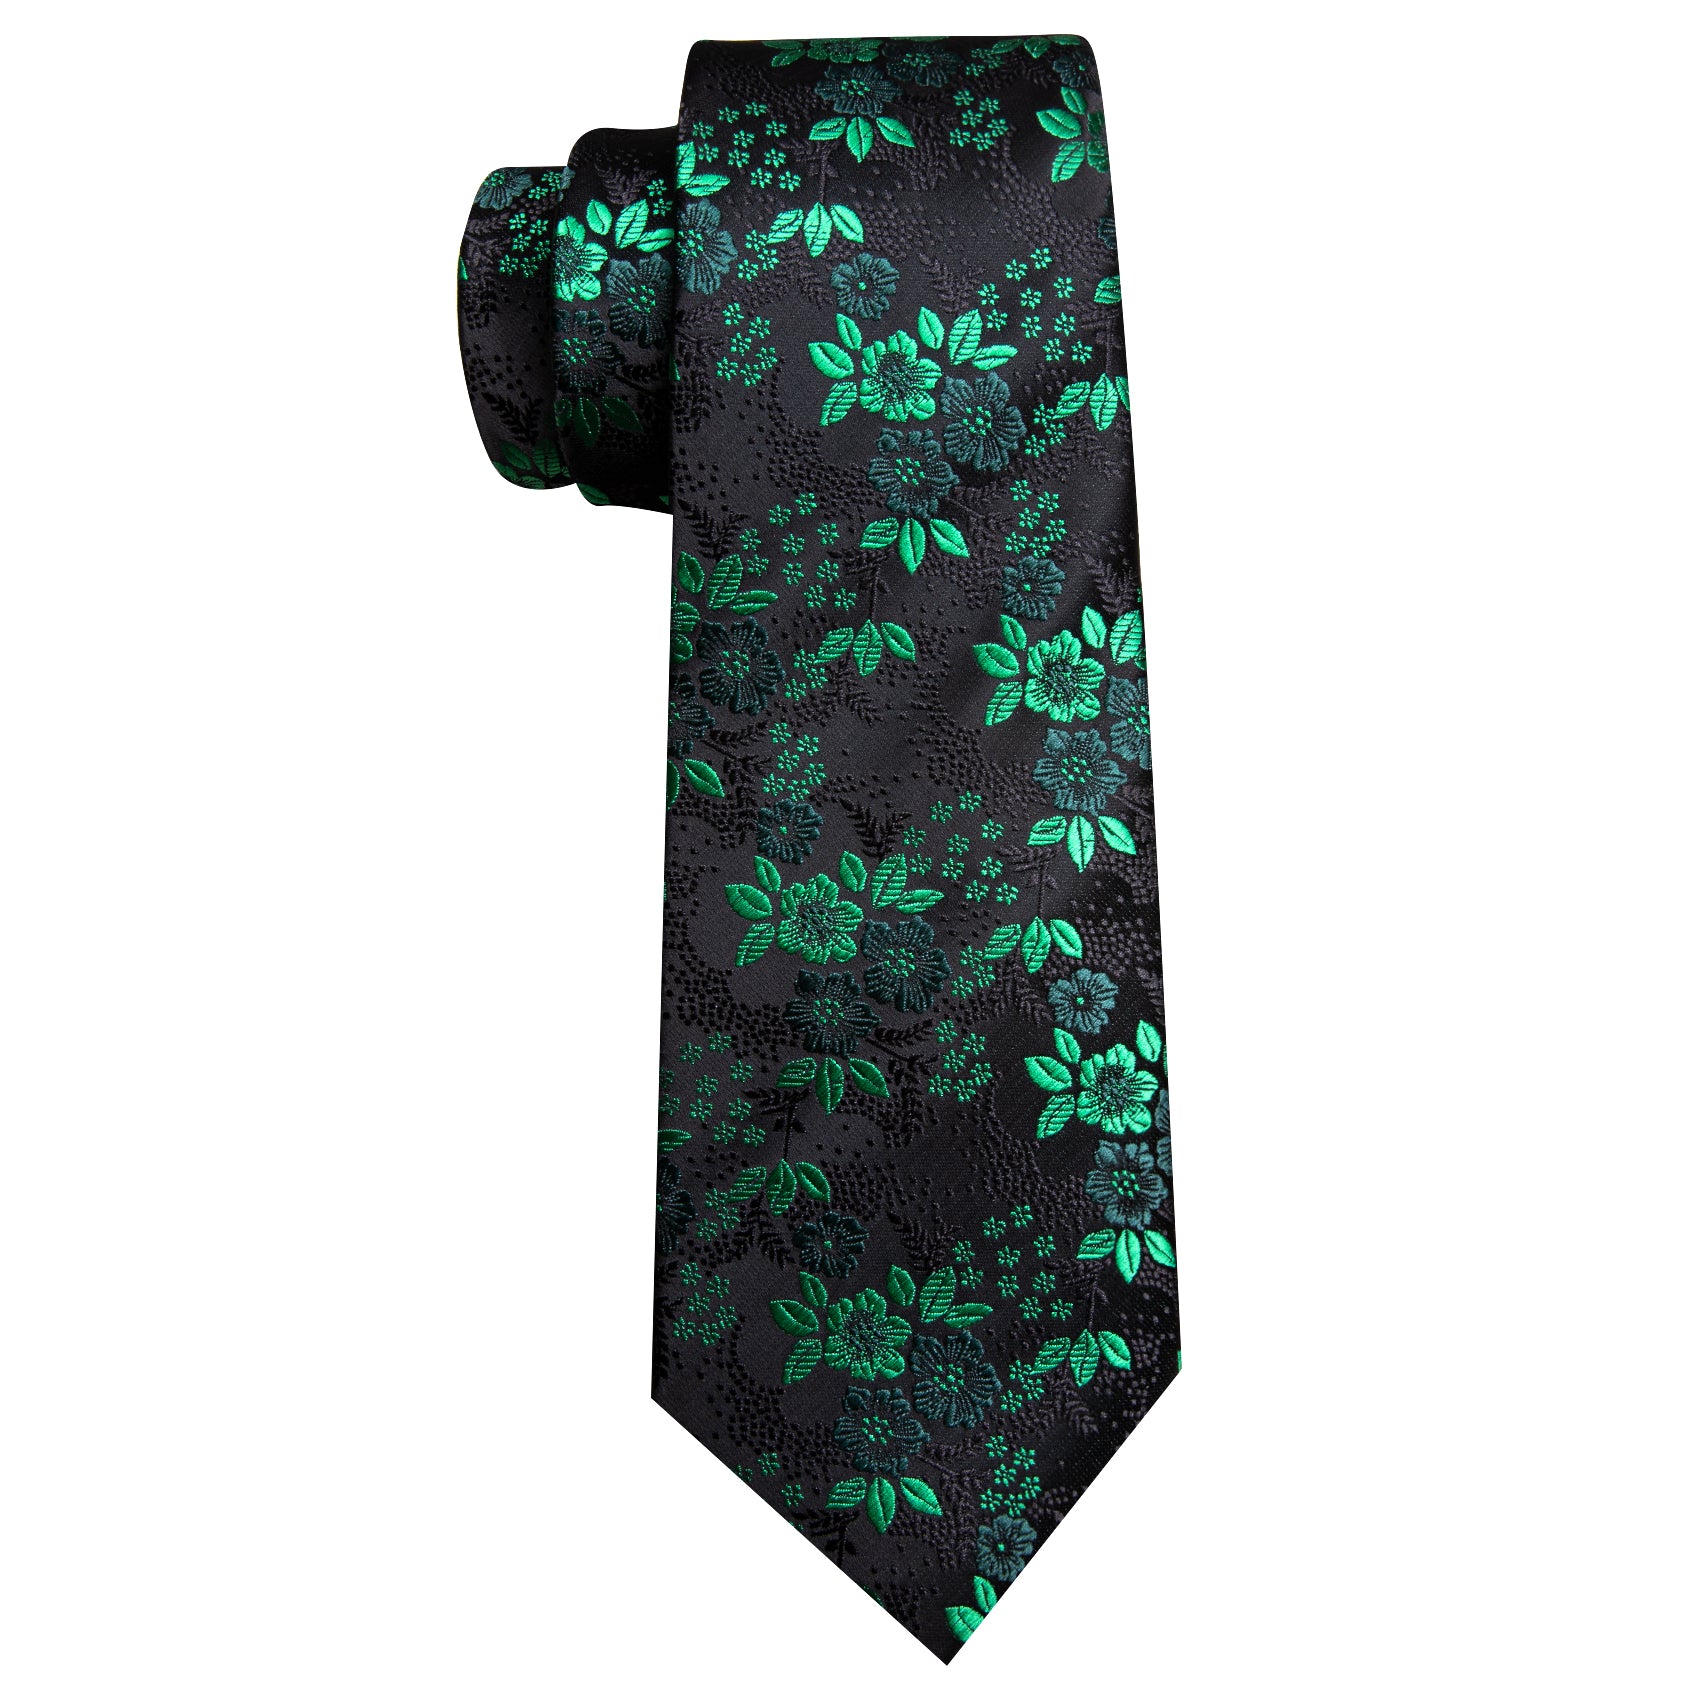 Barry Wang Green Black Floral Silk Tie Pocket Square Cufflinks Set